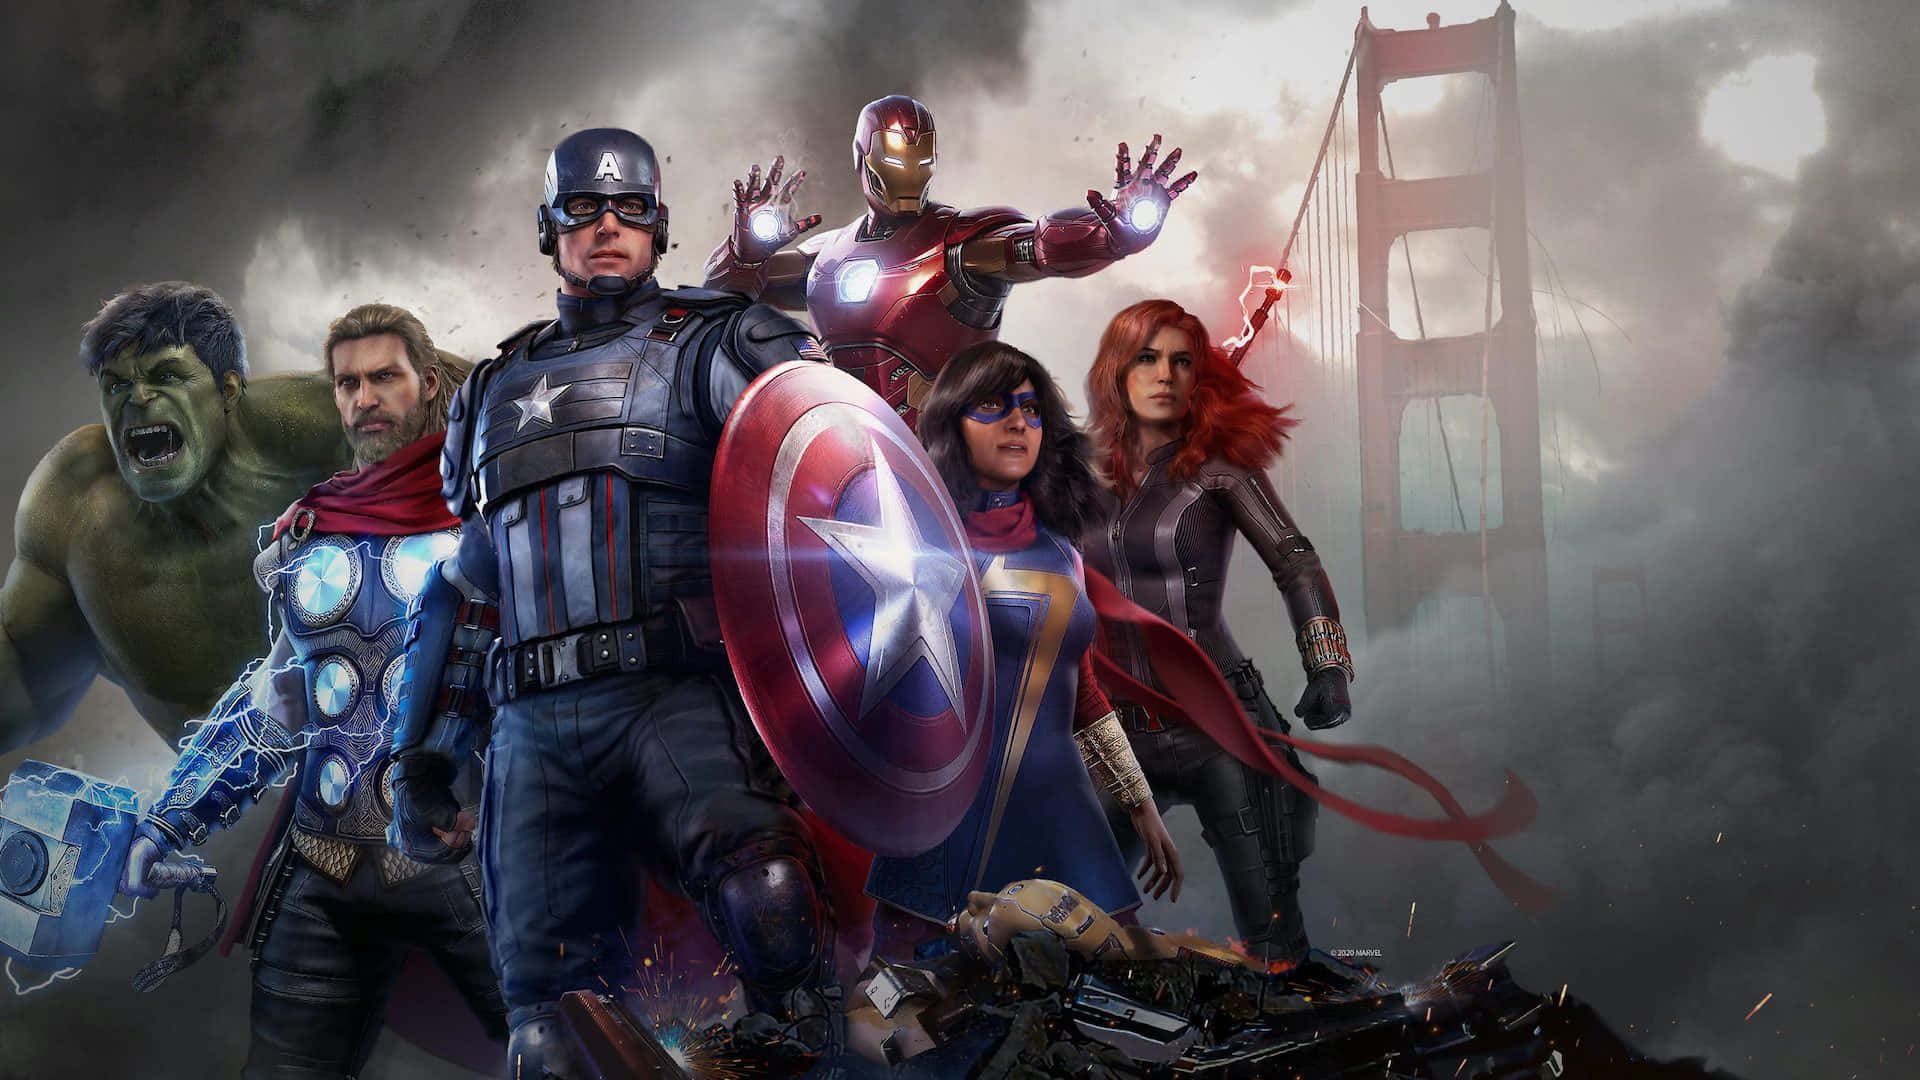 Captain America and Iron Man Clash in Intense Superhero Video Game Scene Wallpaper